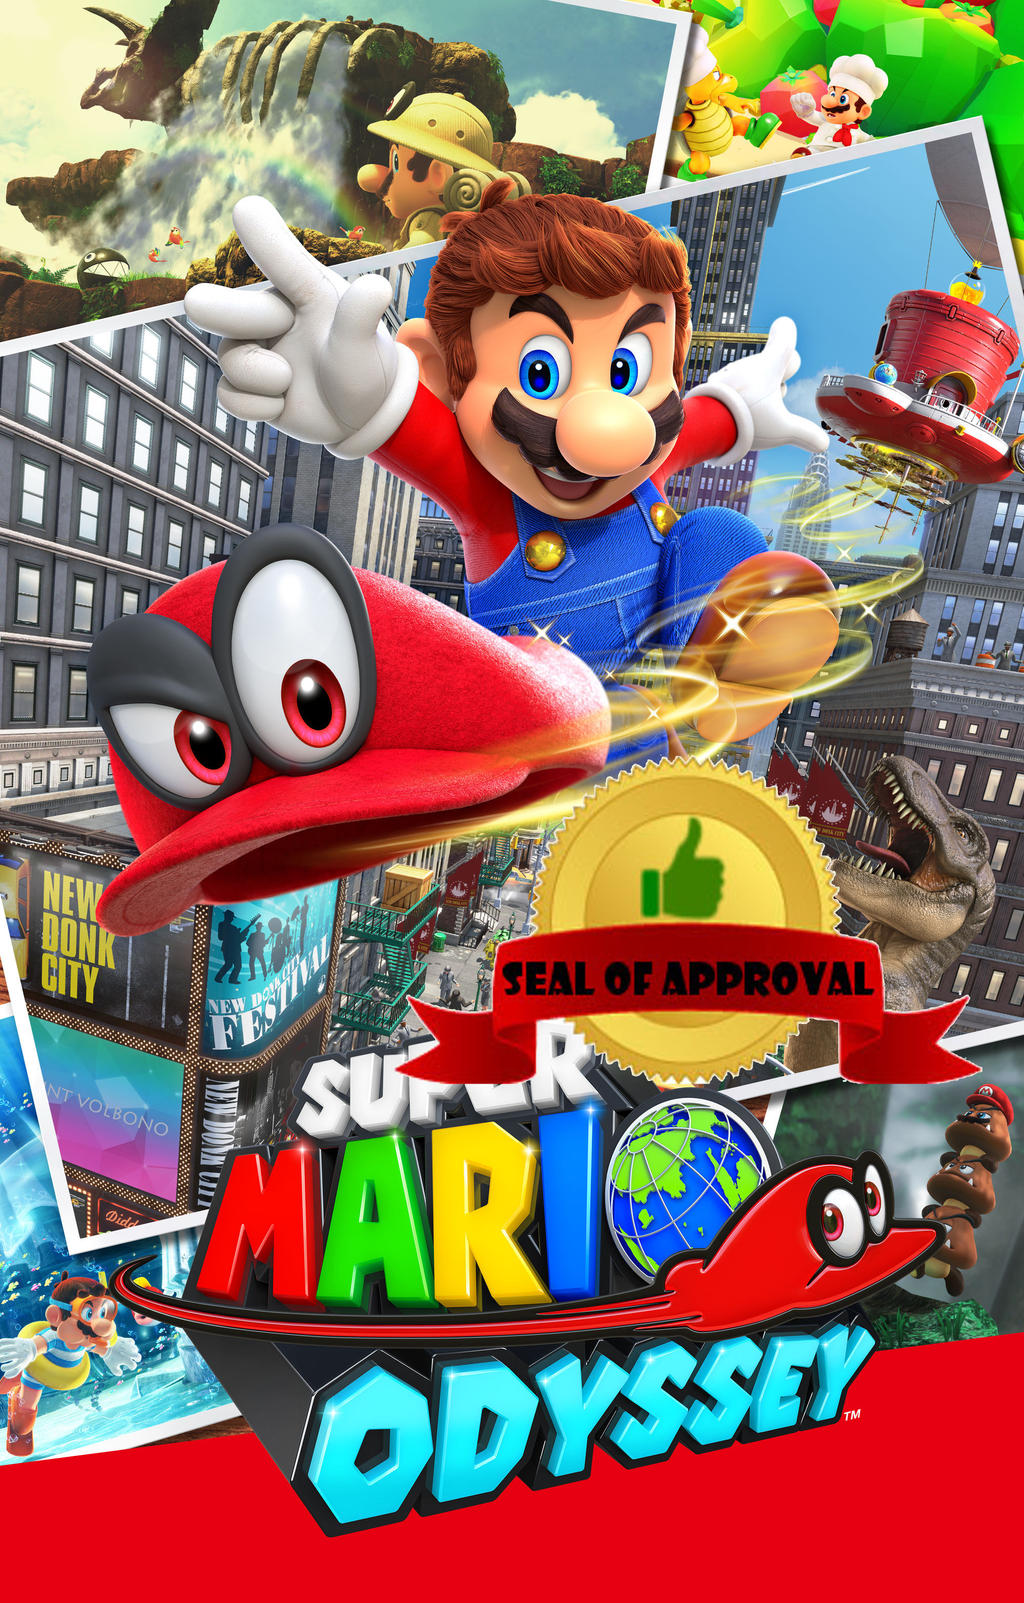 Super Mario Odyssey - Review: Super Mario Odyssey - The Enemy